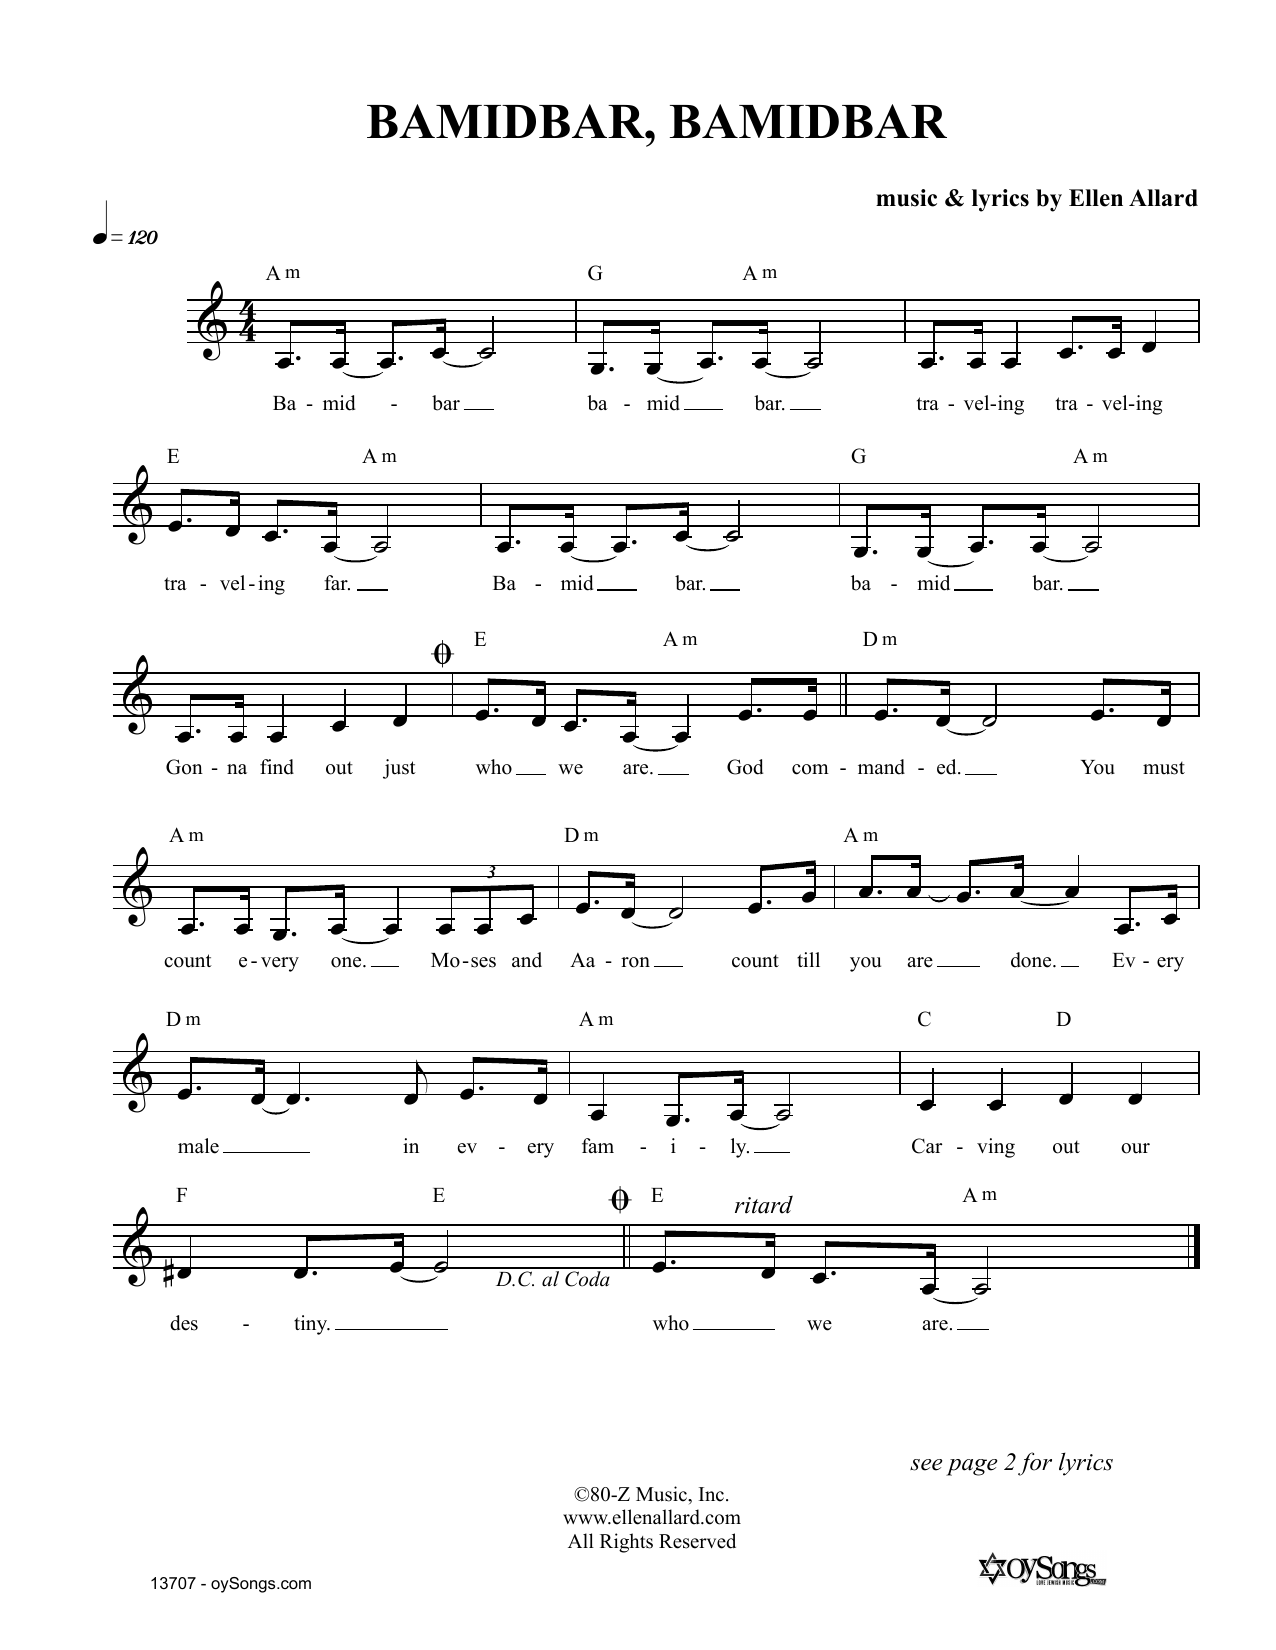 Ellen Allard Bamidbar Bamidbar Sheet Music Notes & Chords for Melody Line, Lyrics & Chords - Download or Print PDF